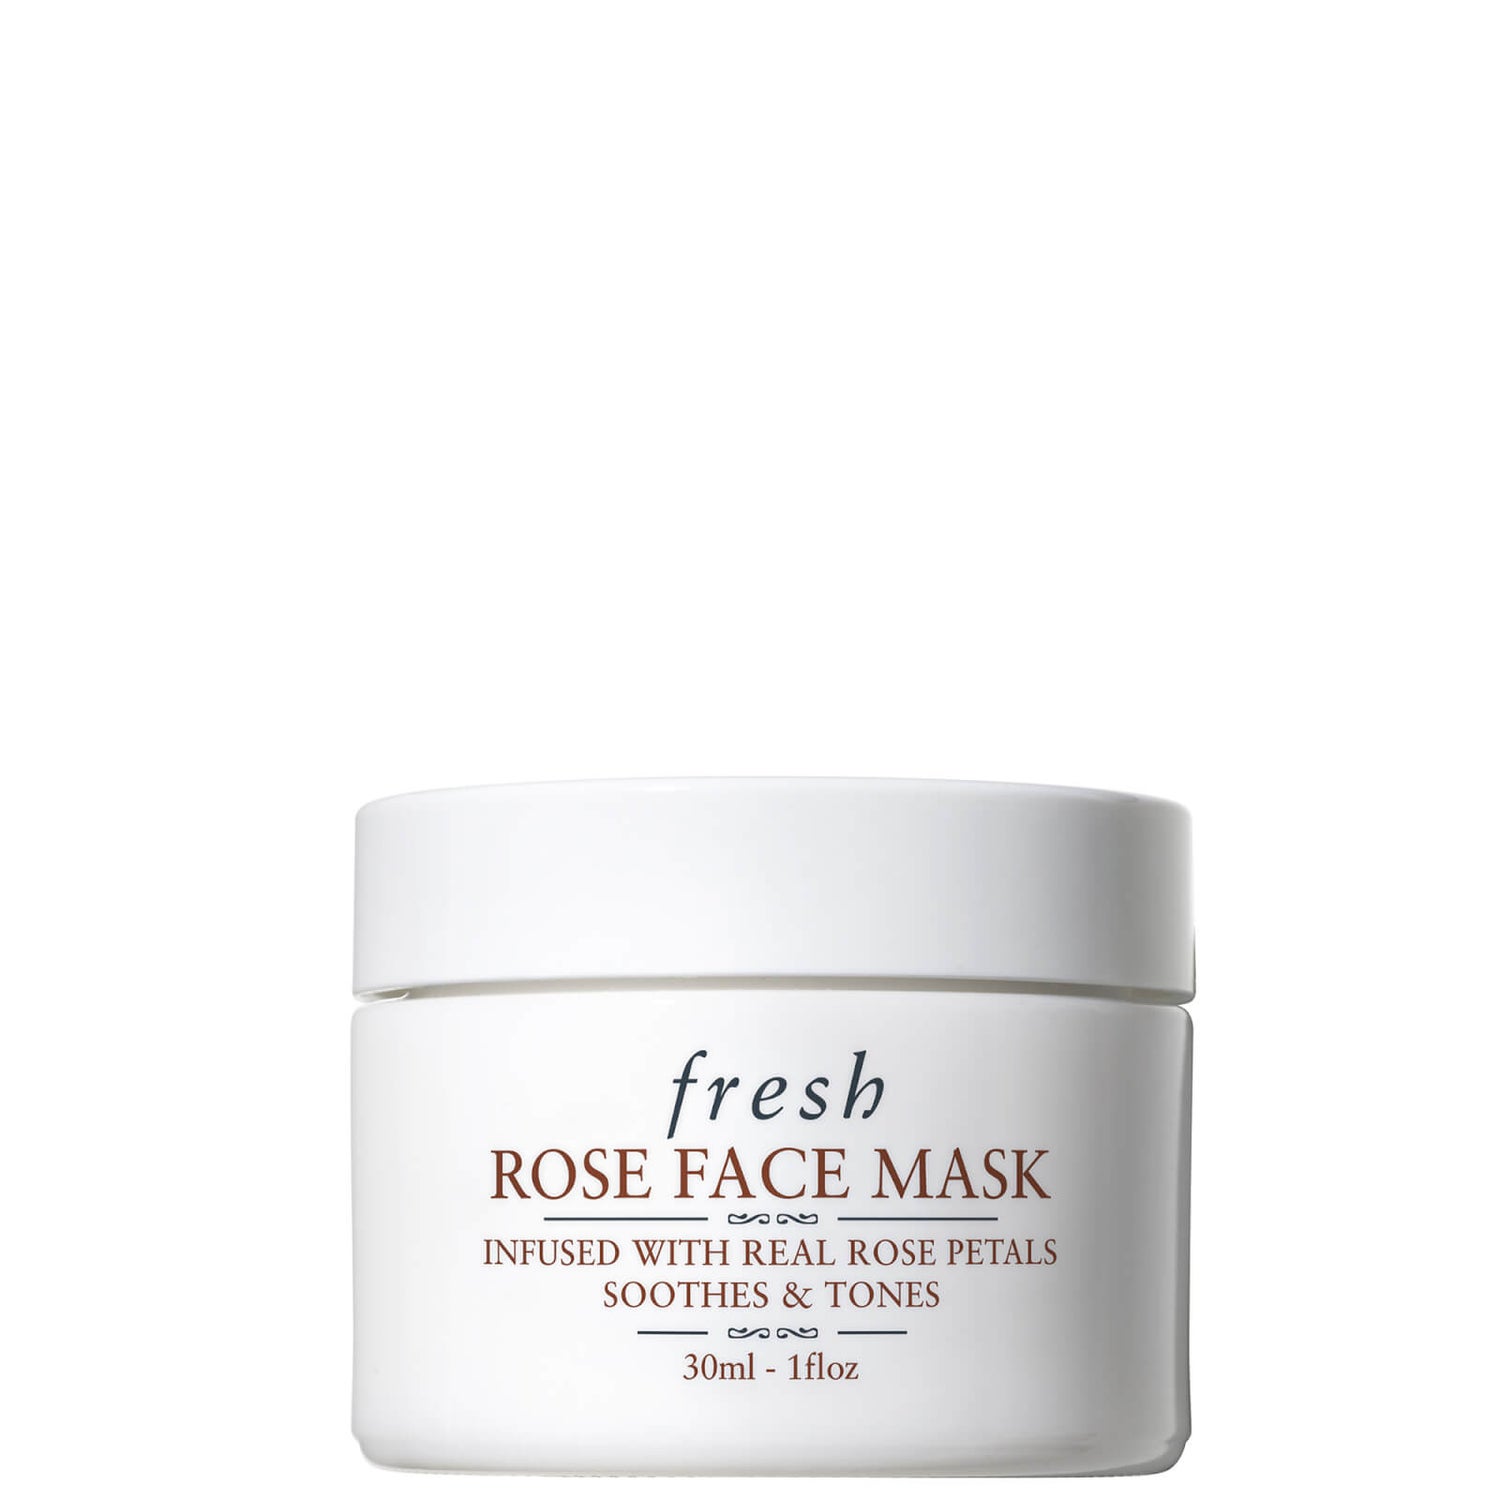 Fresh Rose Face Mask 30ml - LOOKFANTASTIC